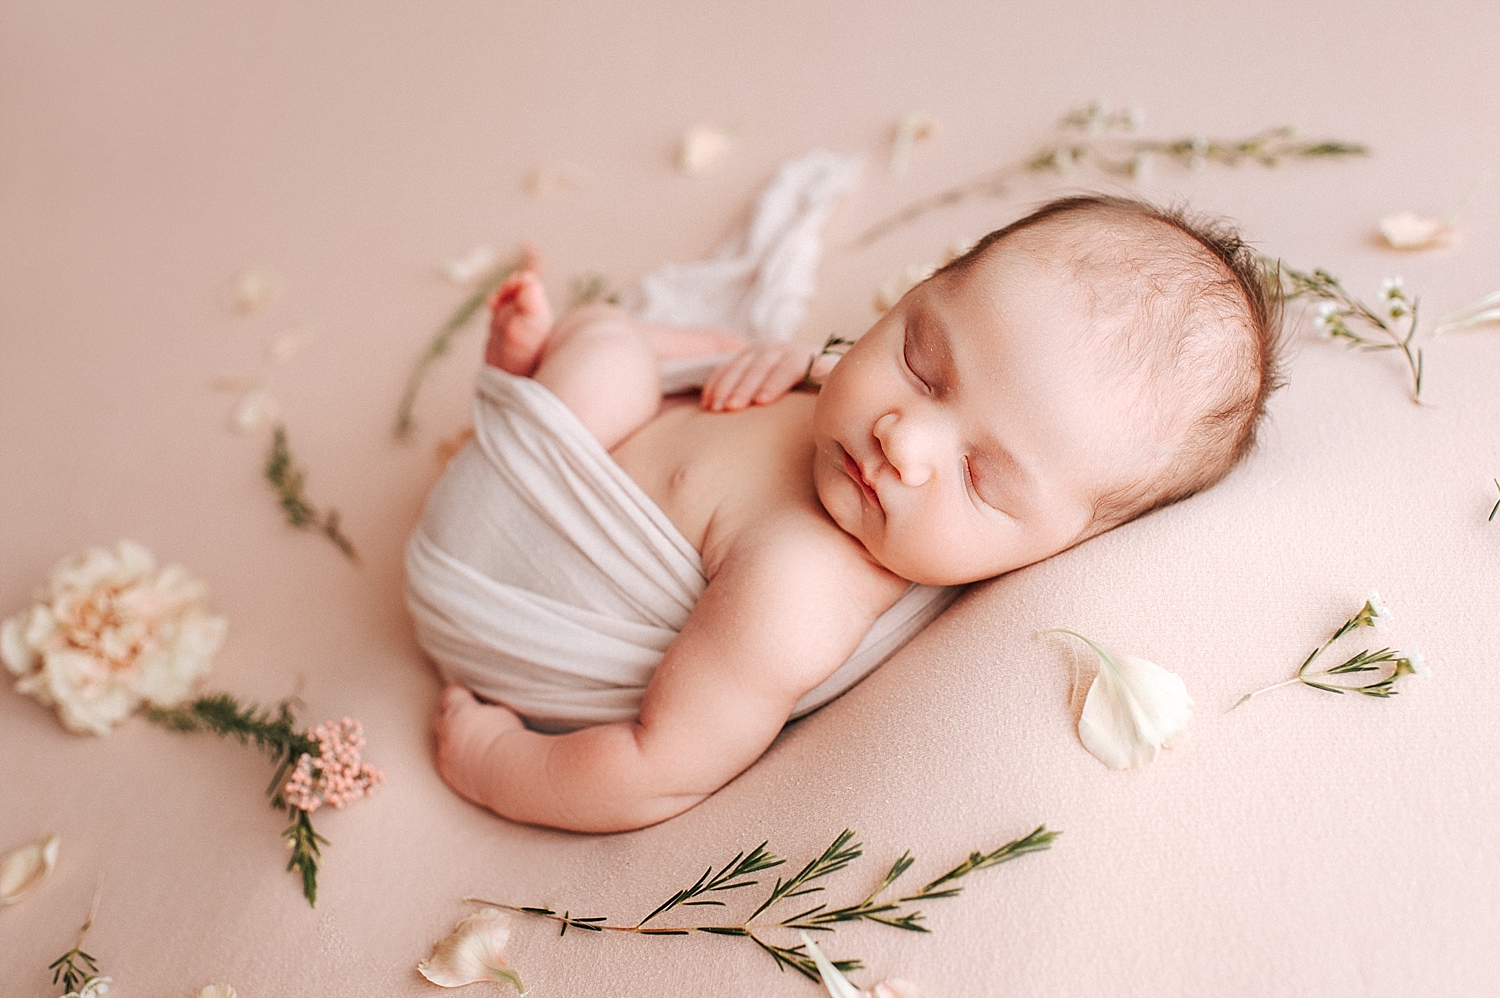 Posed Newborn Photographer | Meg Newton Photography